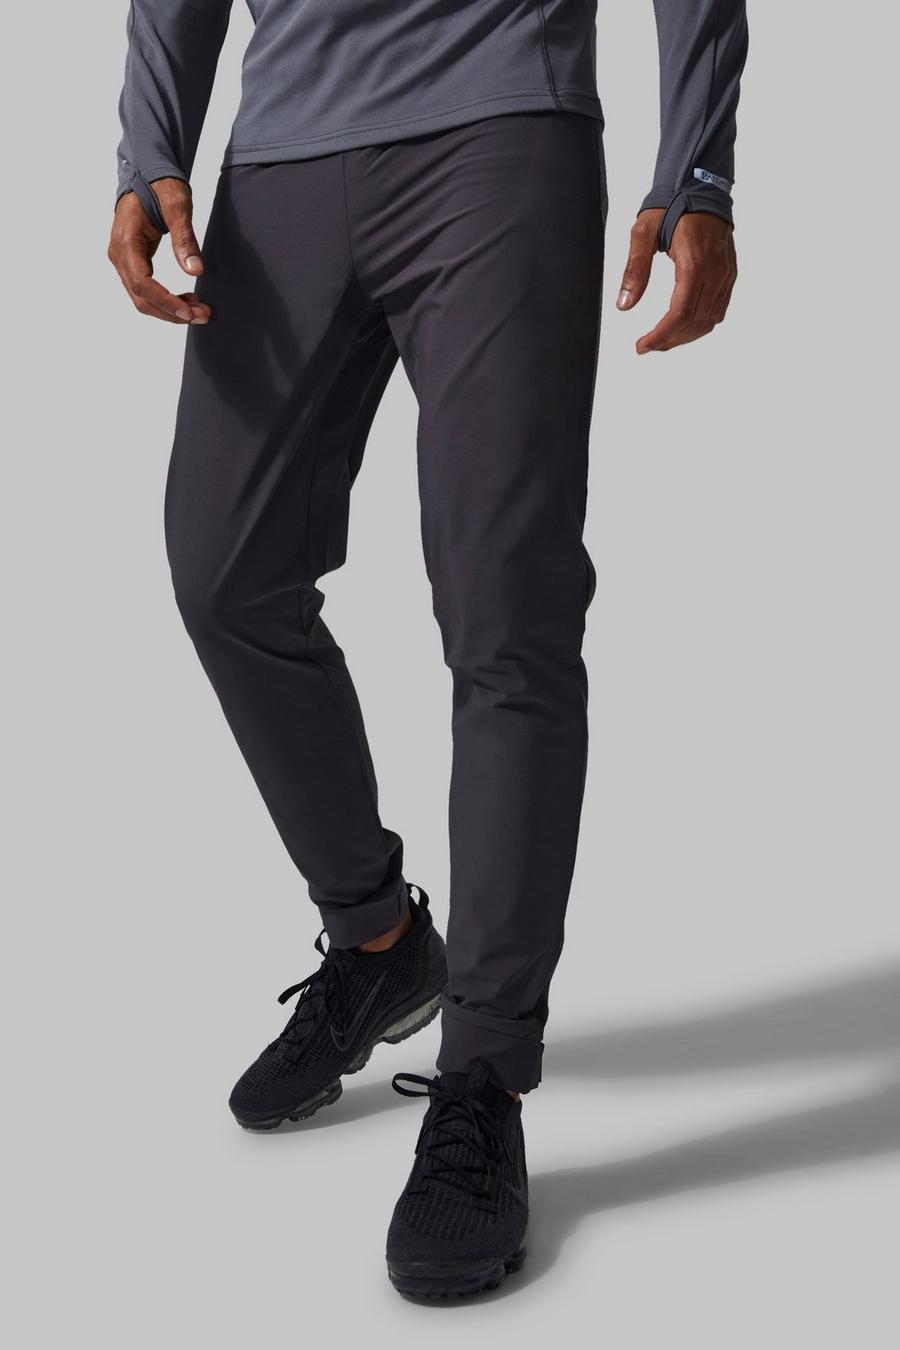 Schmale Man Active Jogginghose mit reflektierendem Klettverschluss, Charcoal gris